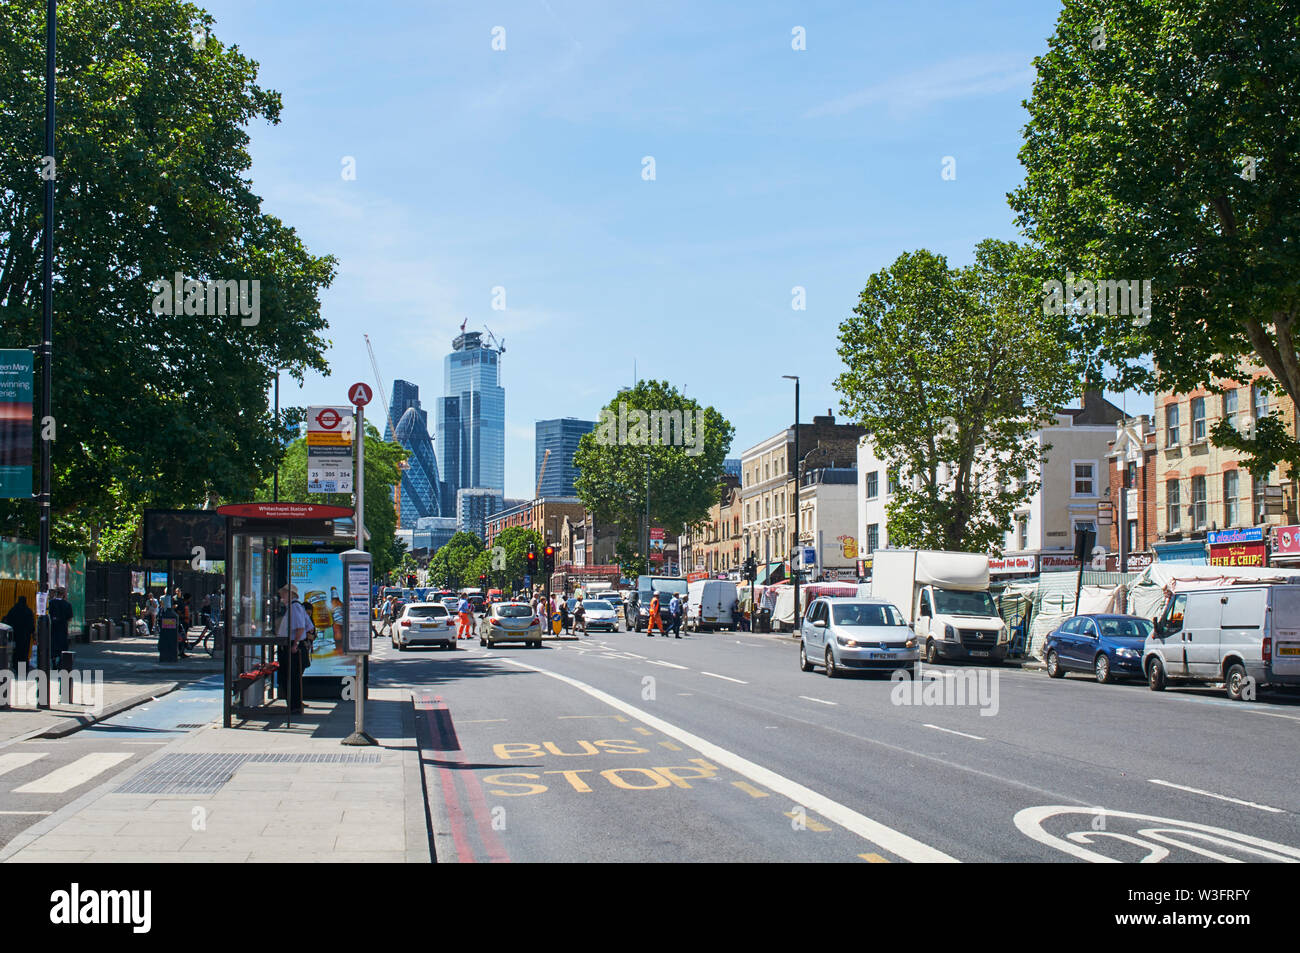 Whitechapel Road, East London UK, looking west towards the City of London Stock Photo